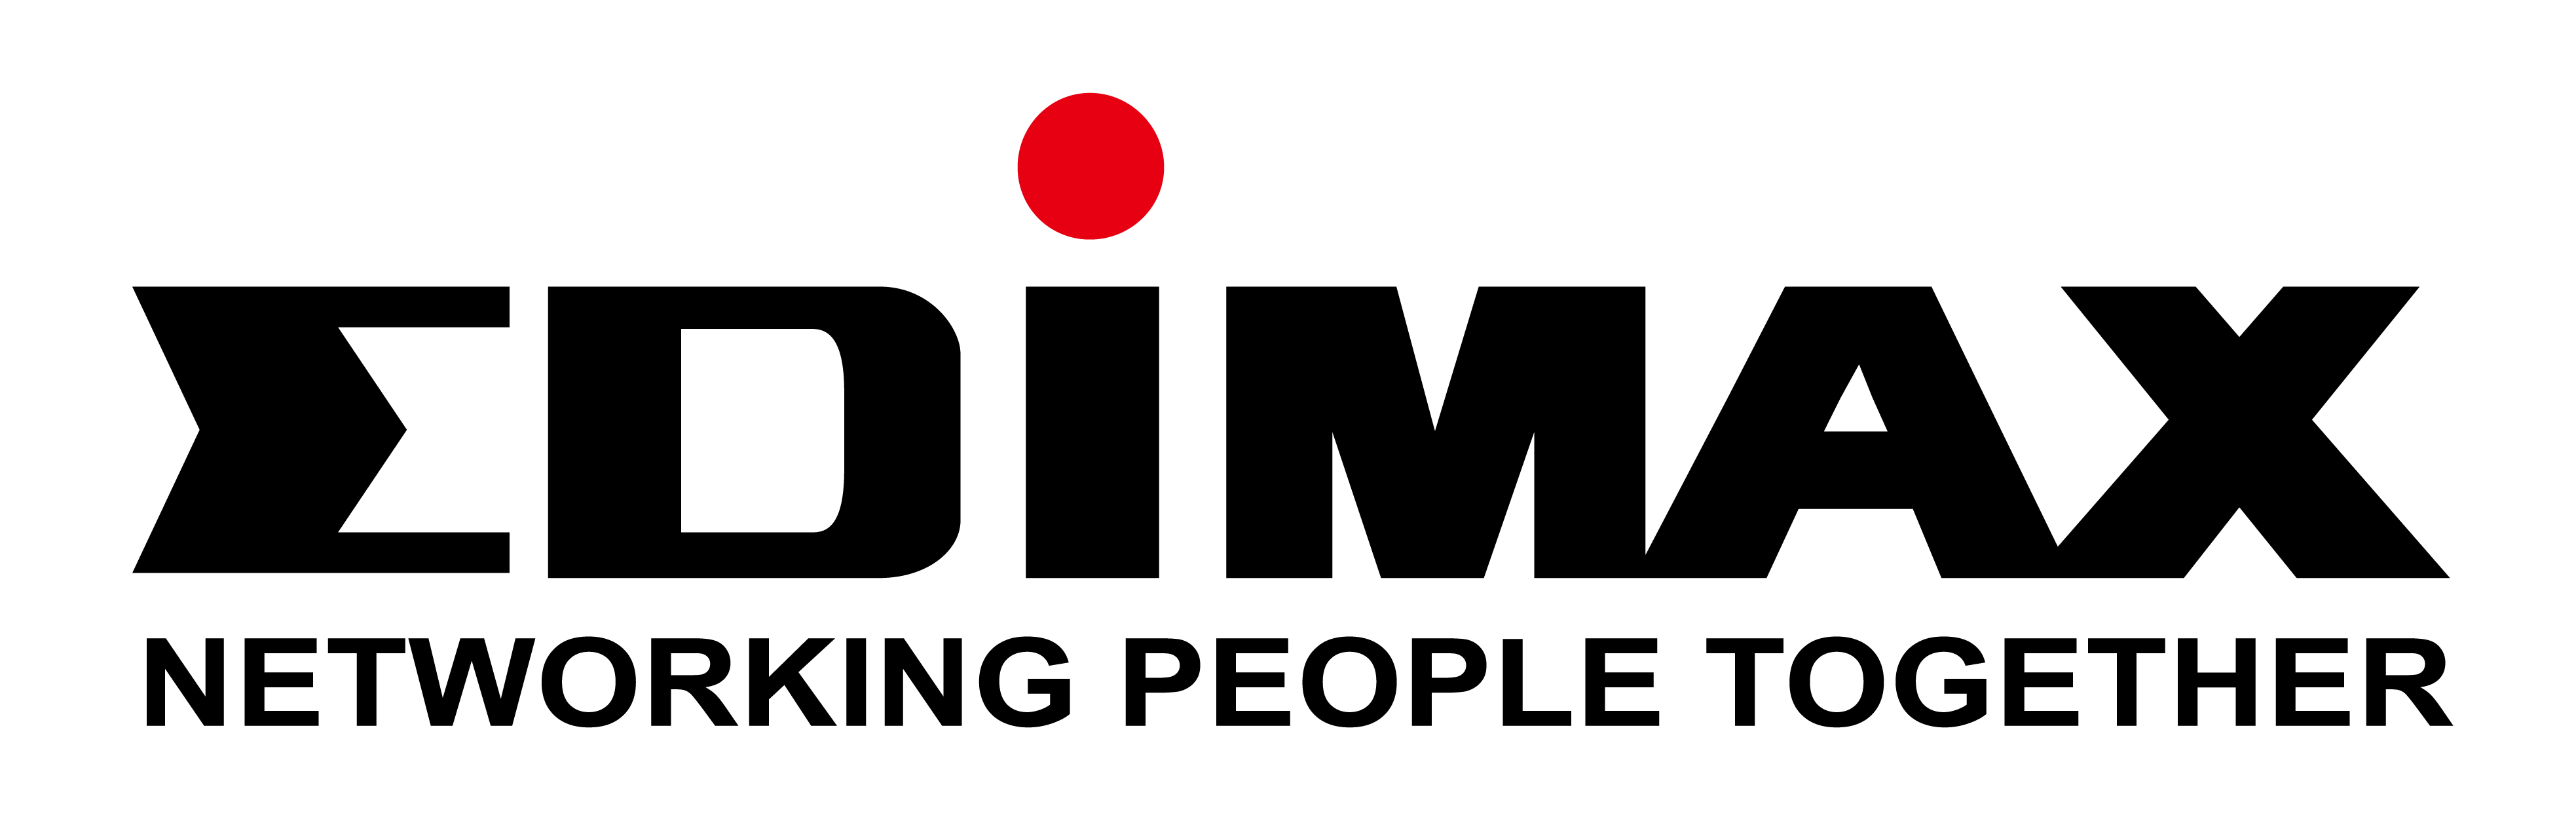 edimax logo standard 01